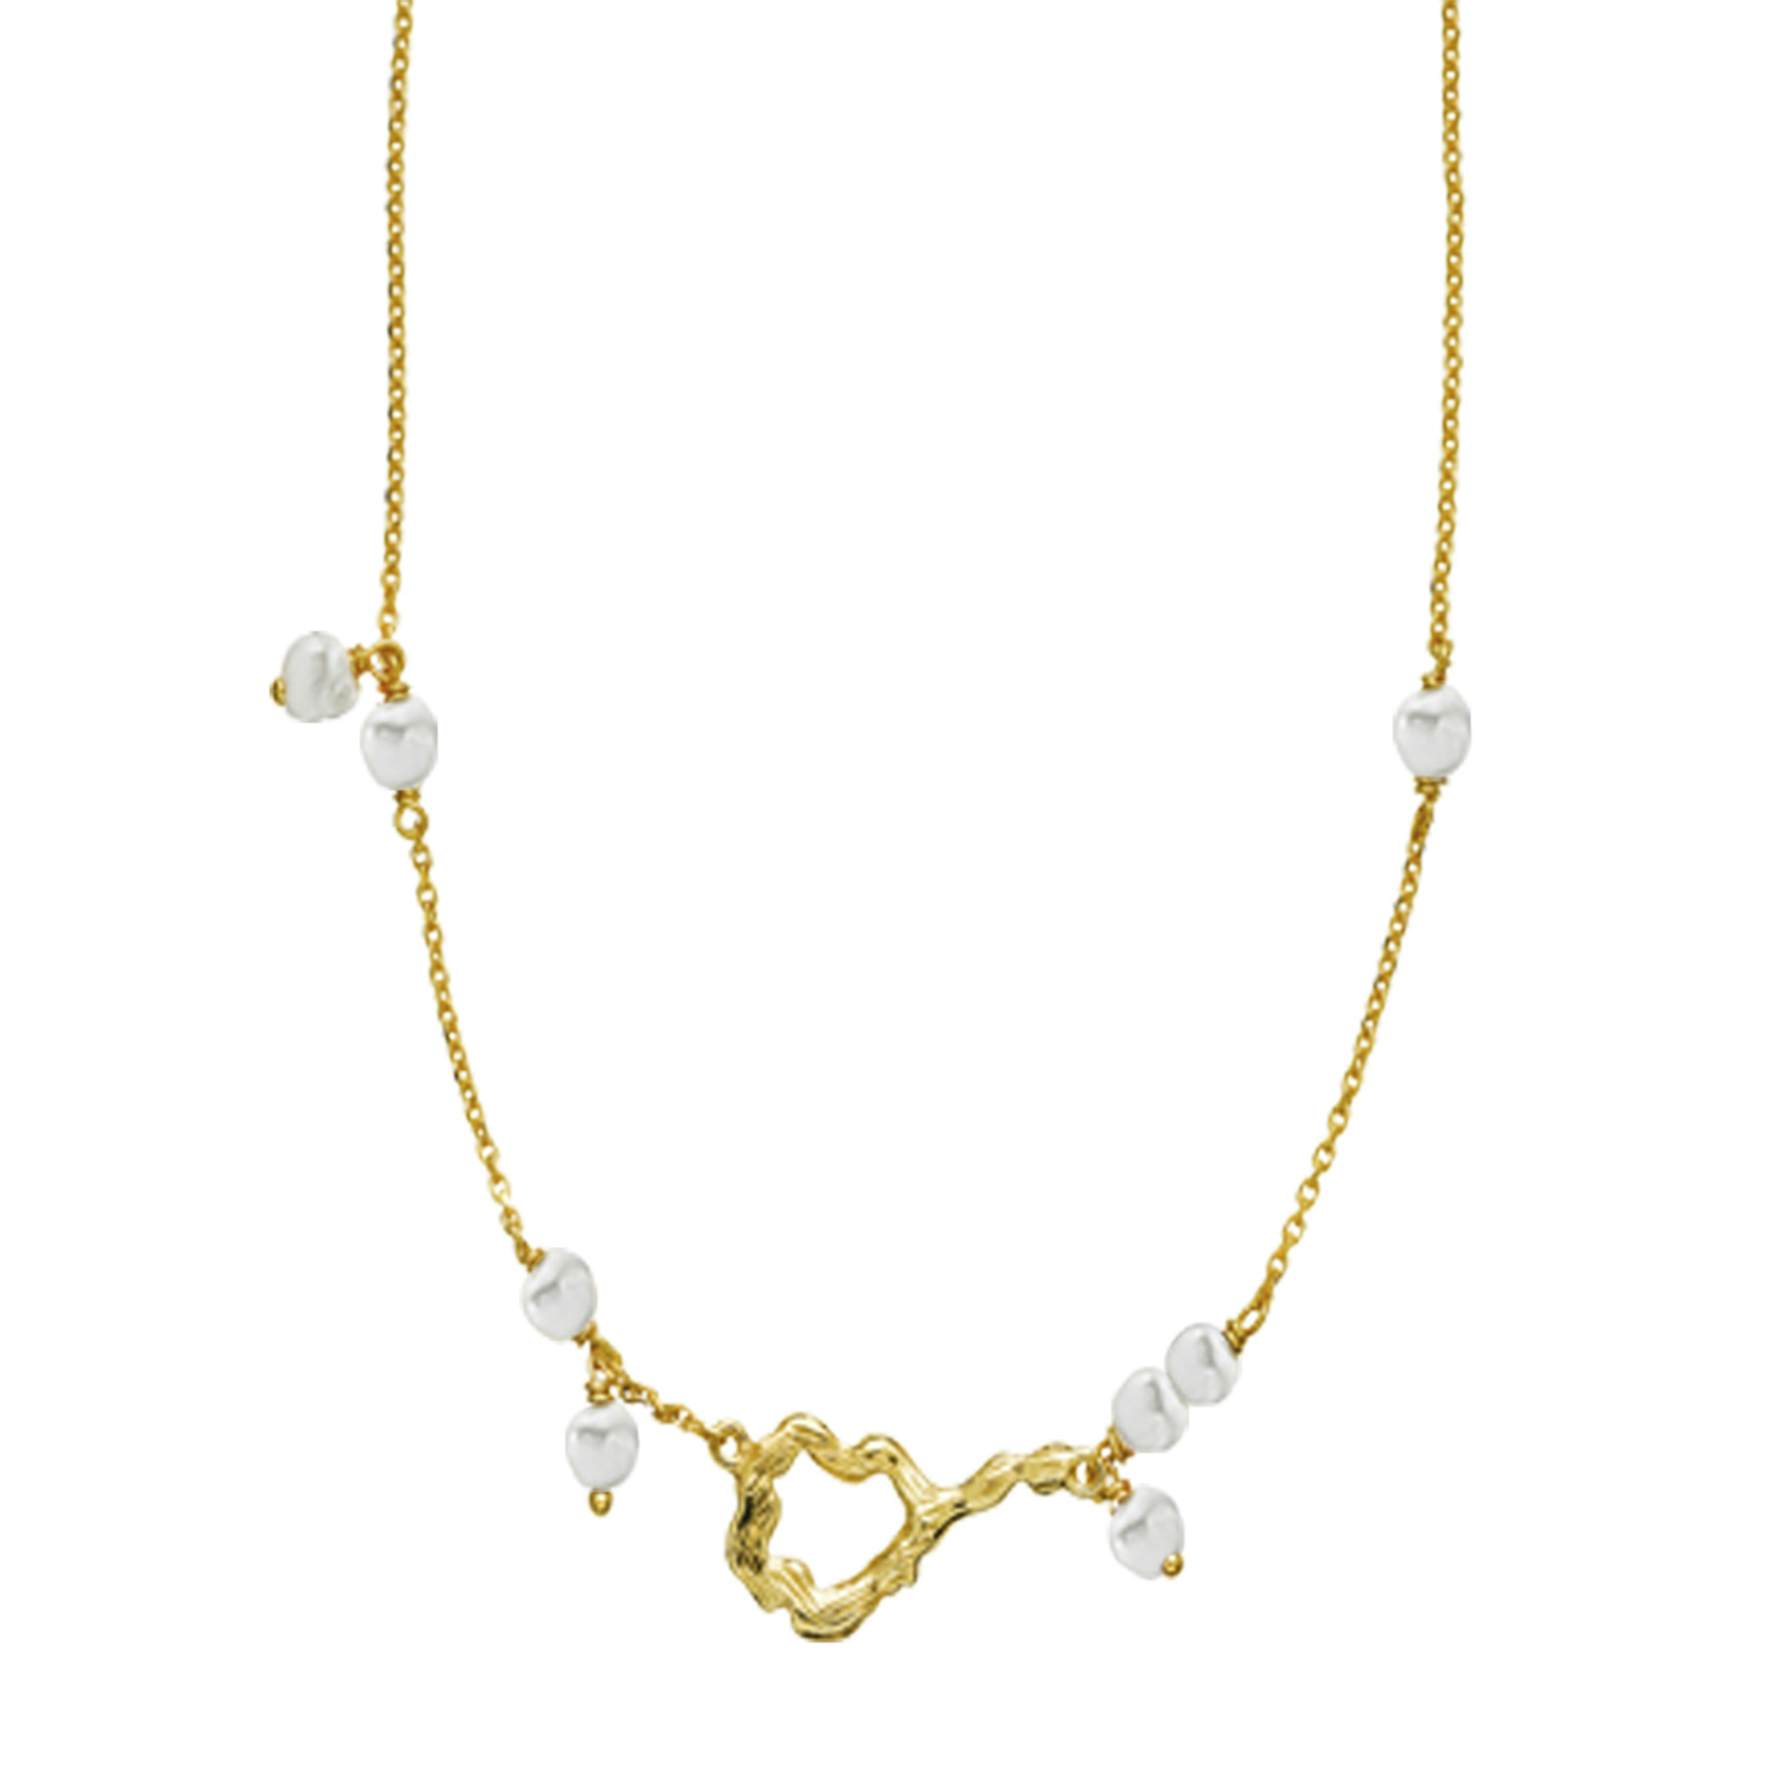 Lærke Bentsen By Sistie Necklace With Pearls fra Sistie i Forgyldt-Sølv Sterling 925|Freshwater Pearl